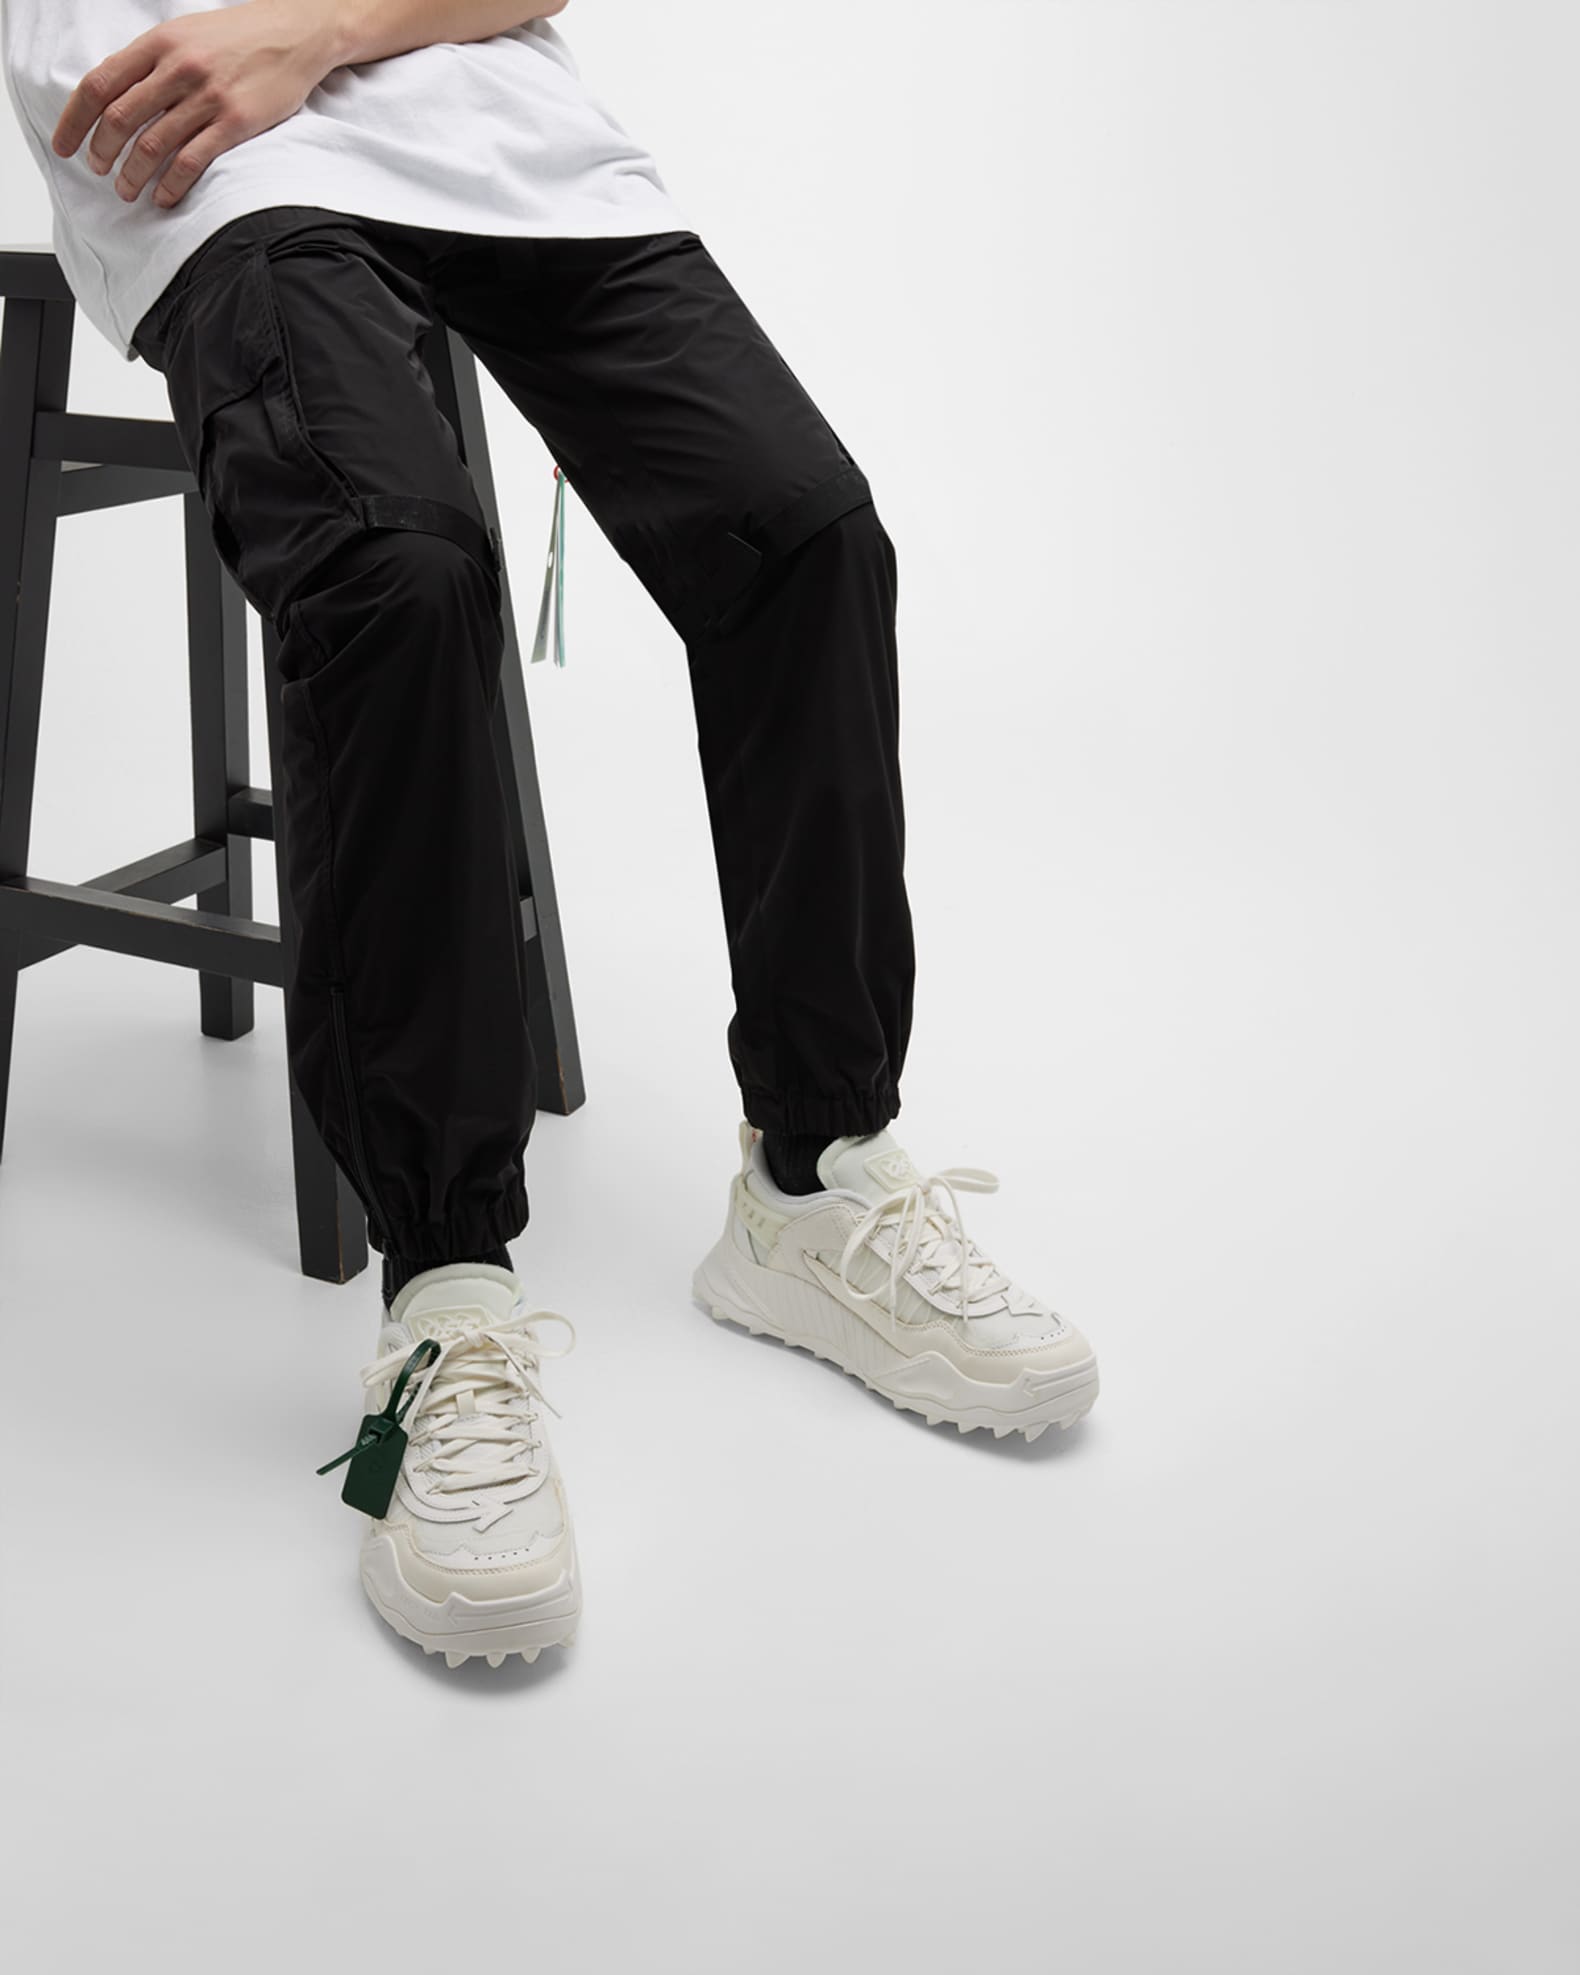 Off-White Men's Odsy 1000 Arrow Trainer Sneakers | Neiman Marcus